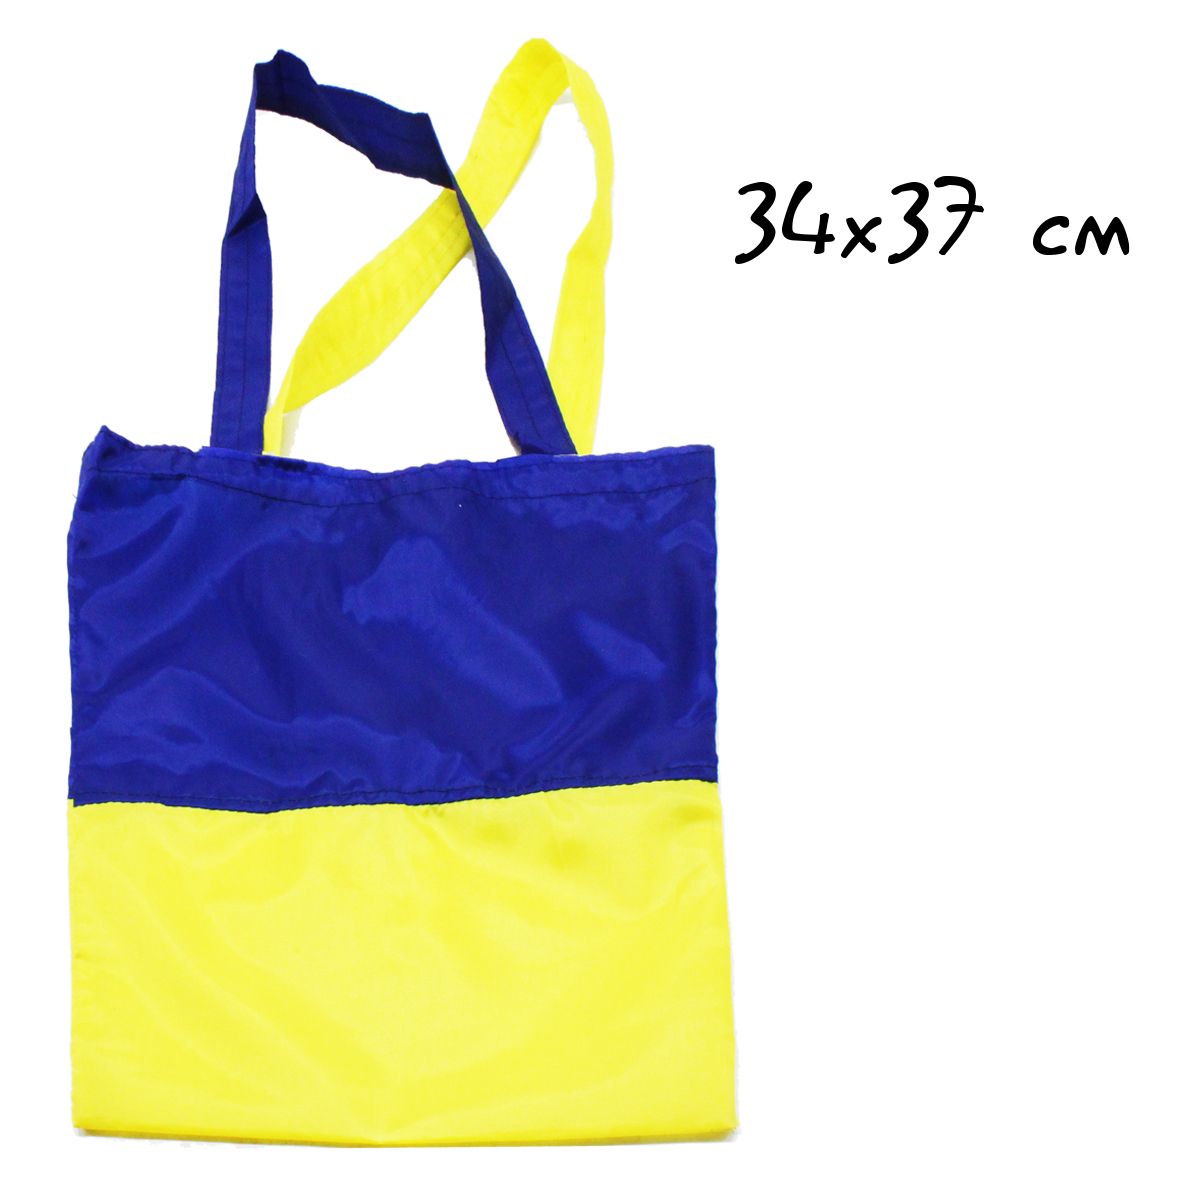 Эко-сумка "Украина", 34х37 см